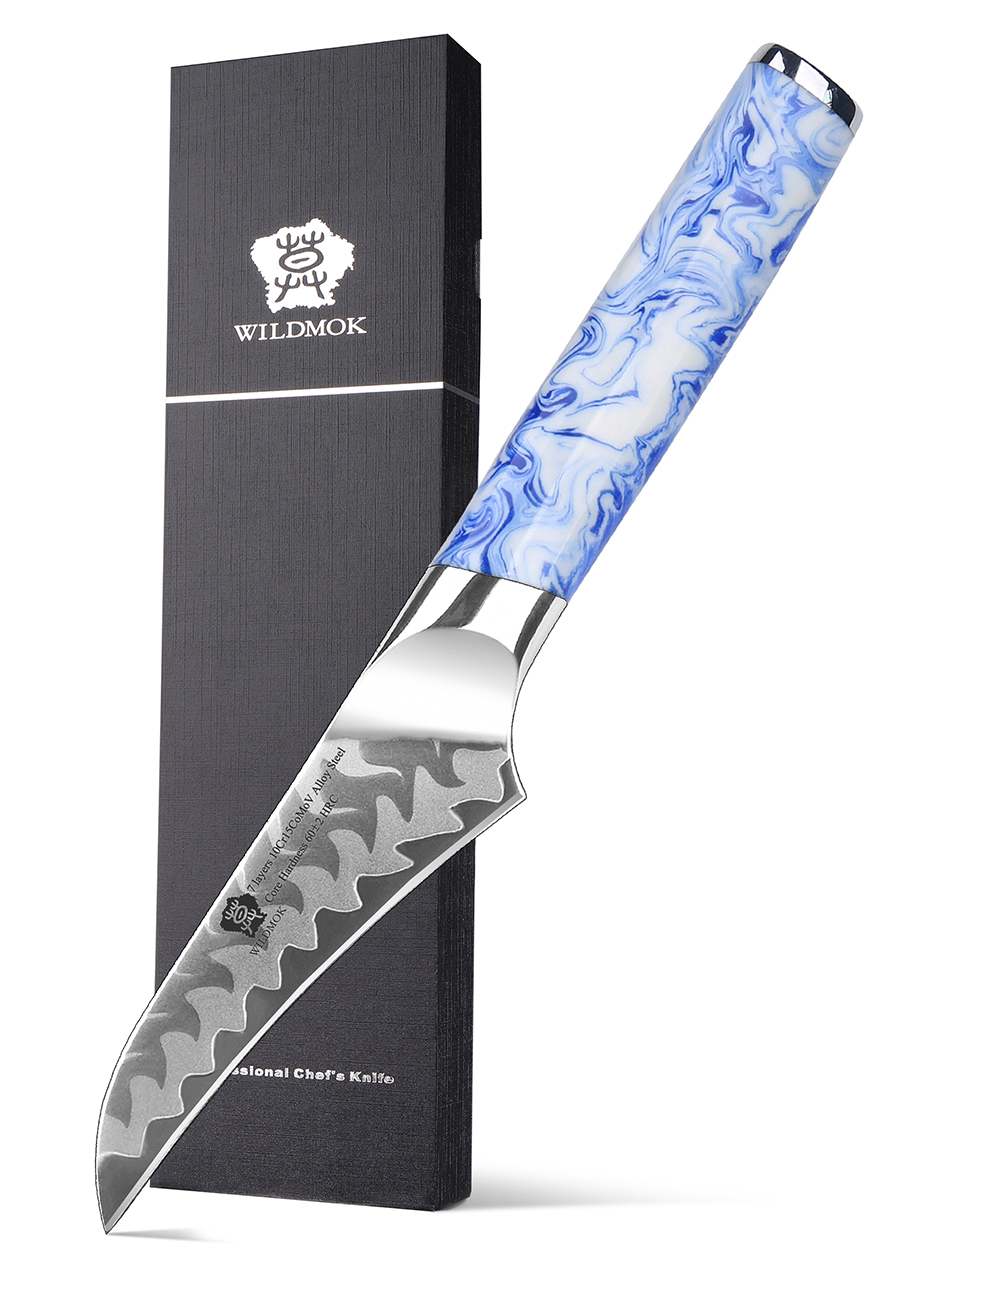 WILDMOK-ERGONOMIC-BLUE-AND-WHITE-PORCELAIN-PATTERN-PARING-KNIFE